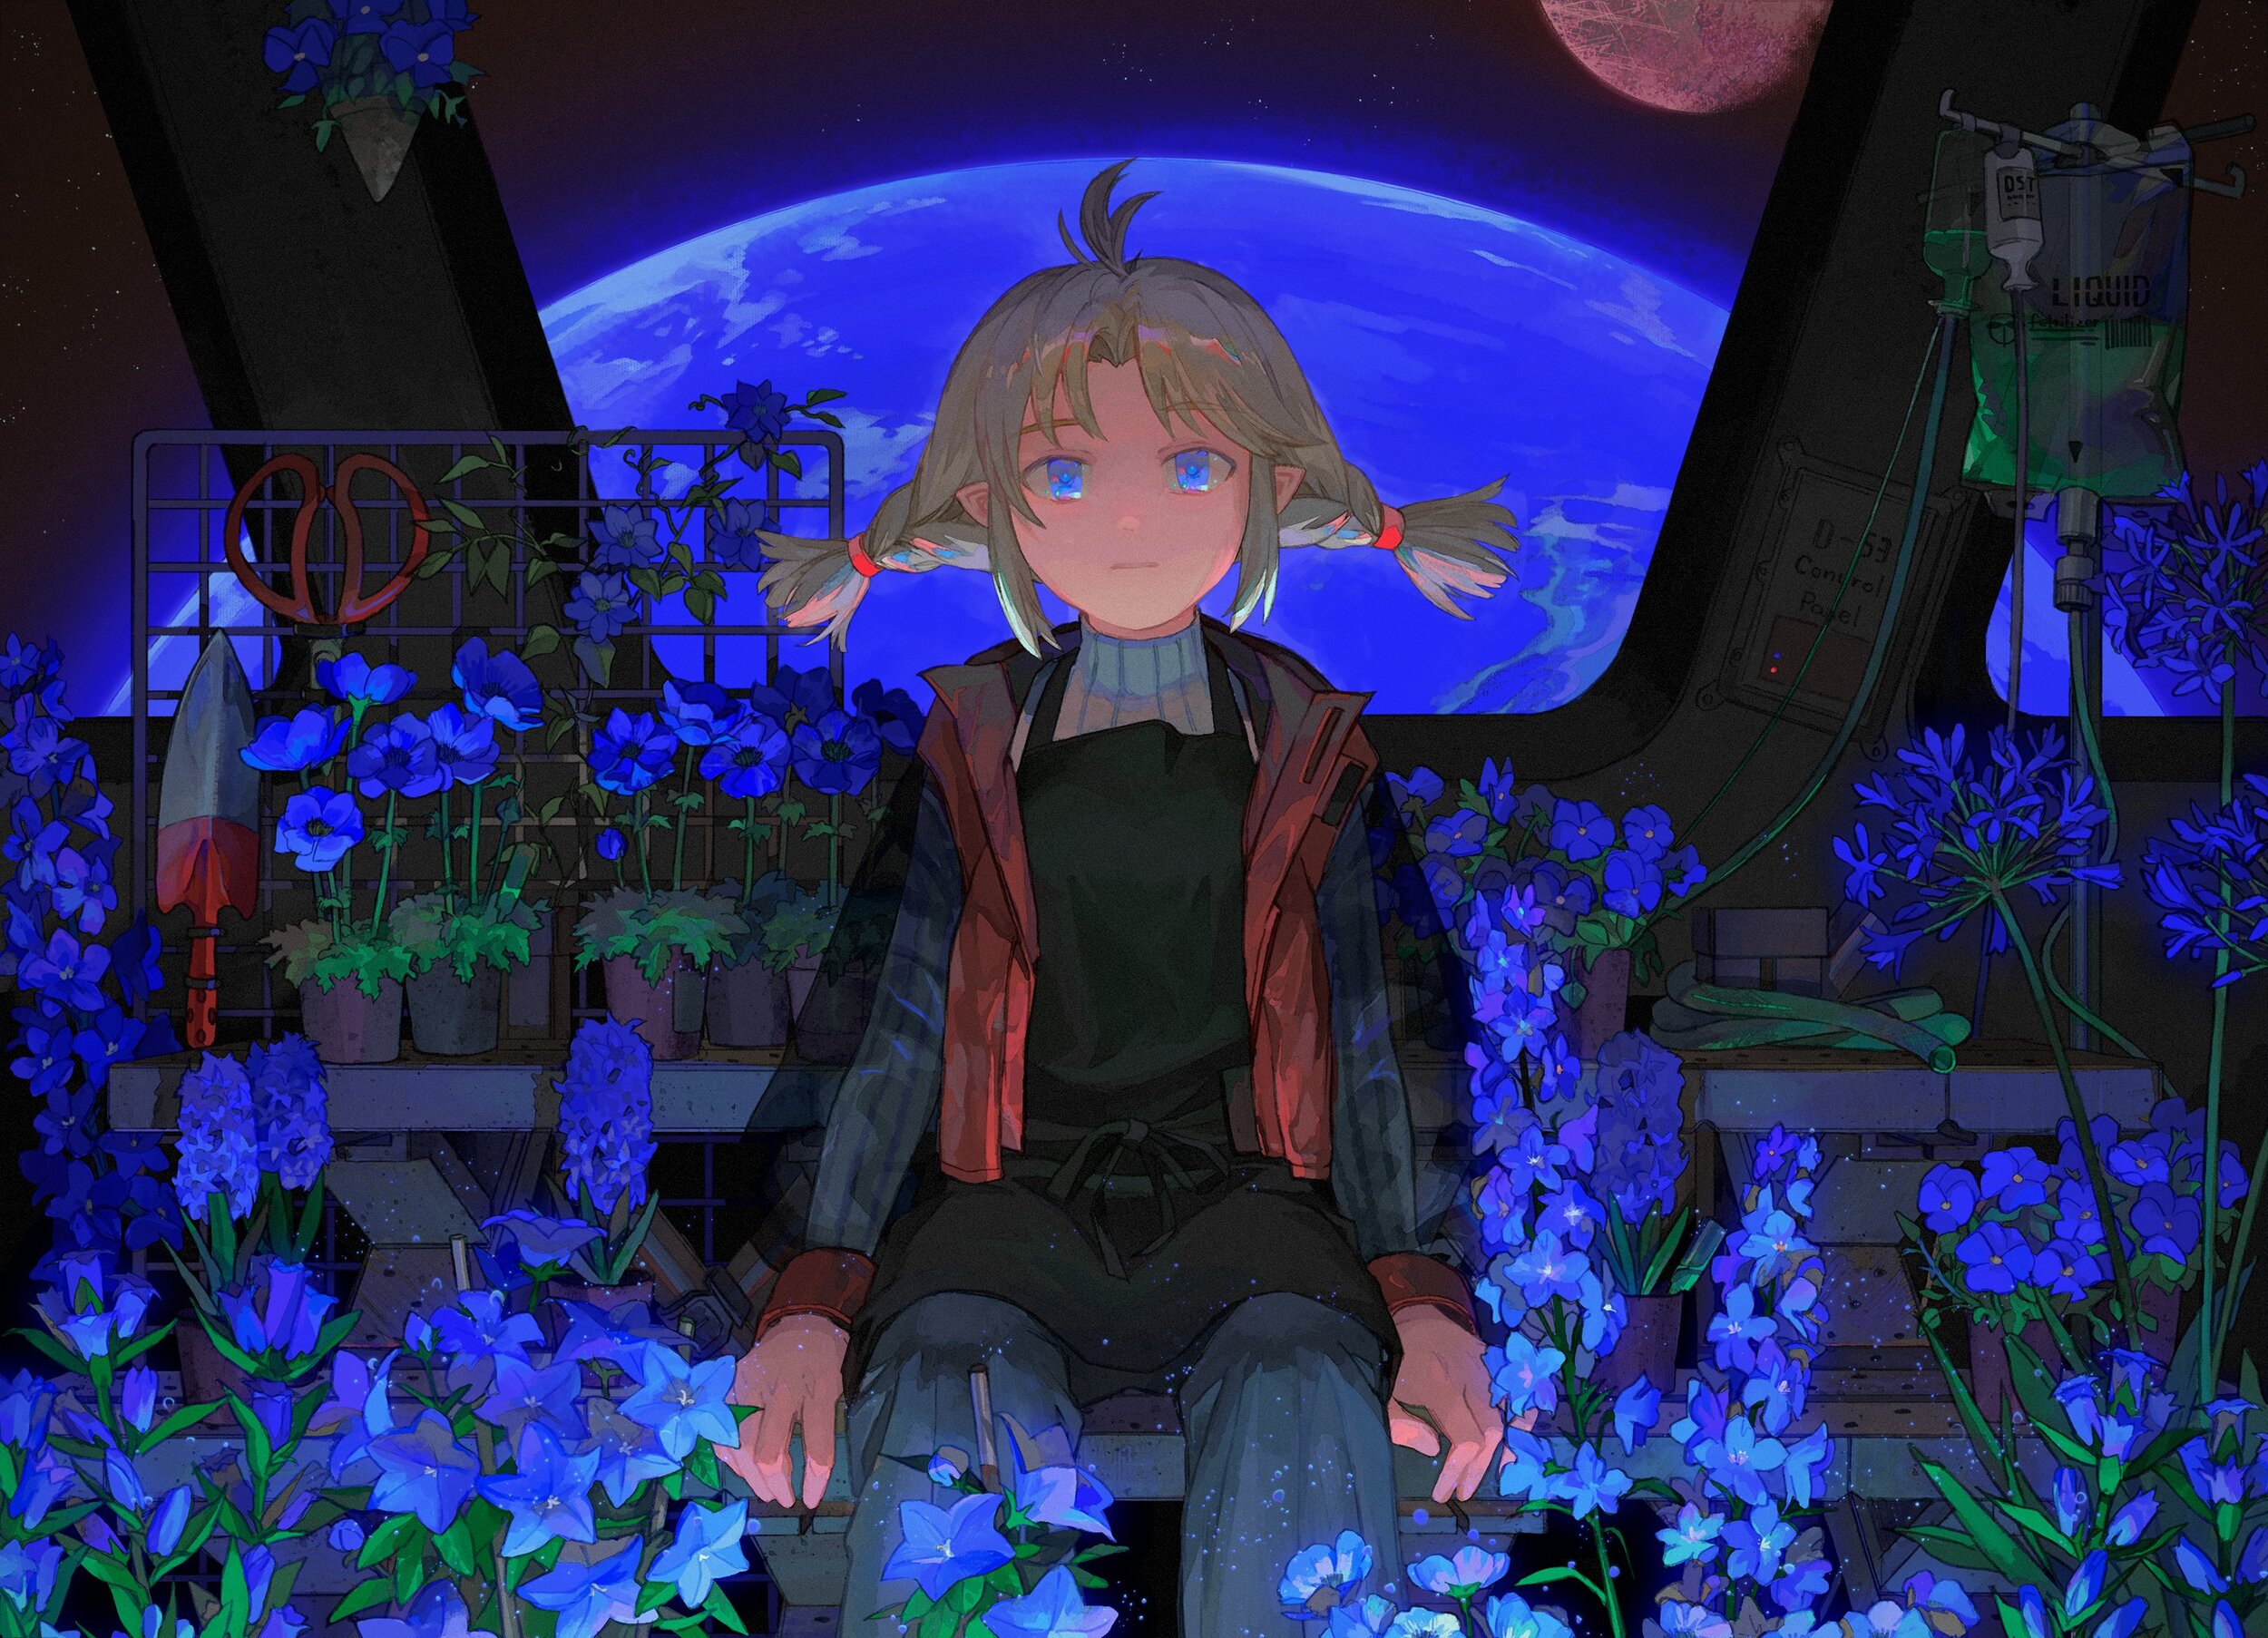 Fuwan Manga Pointy Ears Space Flowers Planet Digital Art Artwork Looking At Viewer Sitting Anime Gir 2500x1806